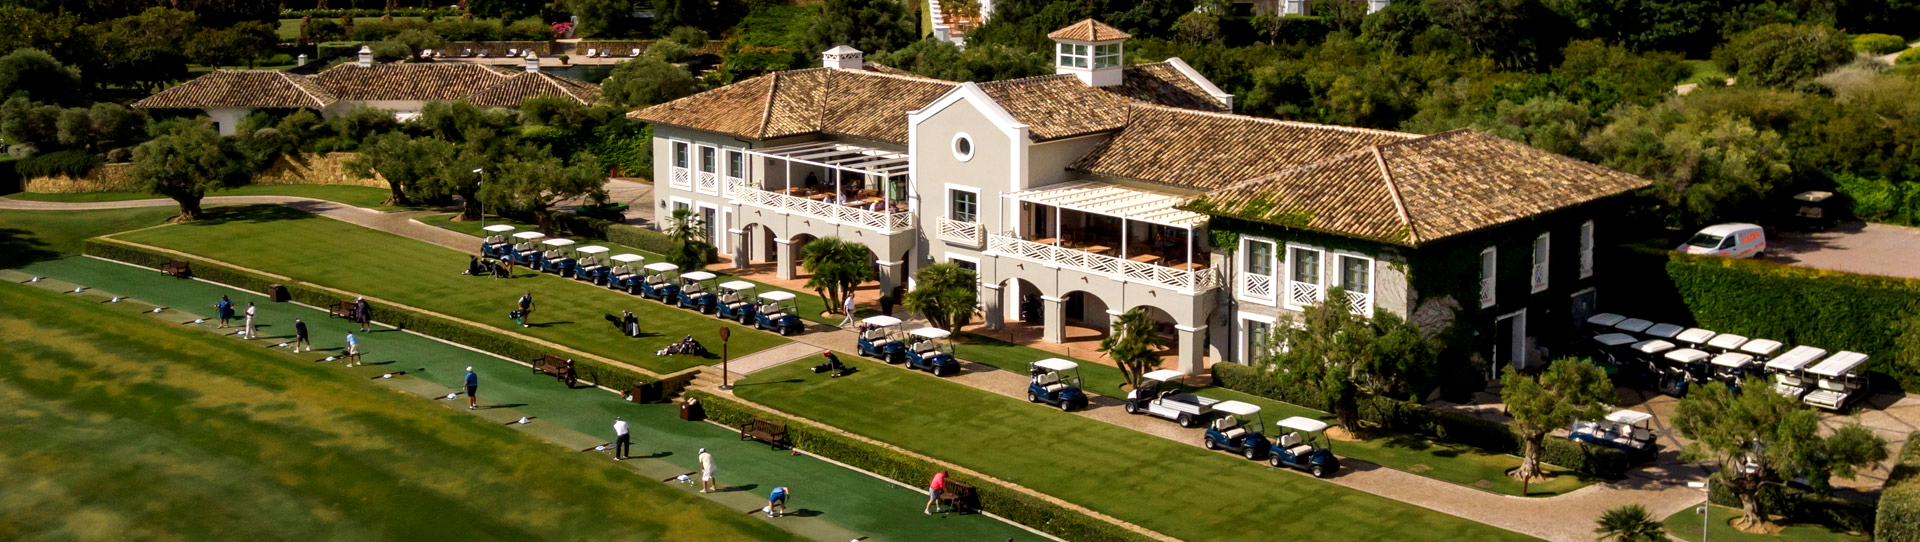 Spain golf holidays - Finca Cortesin Twix Experience - Photo 2